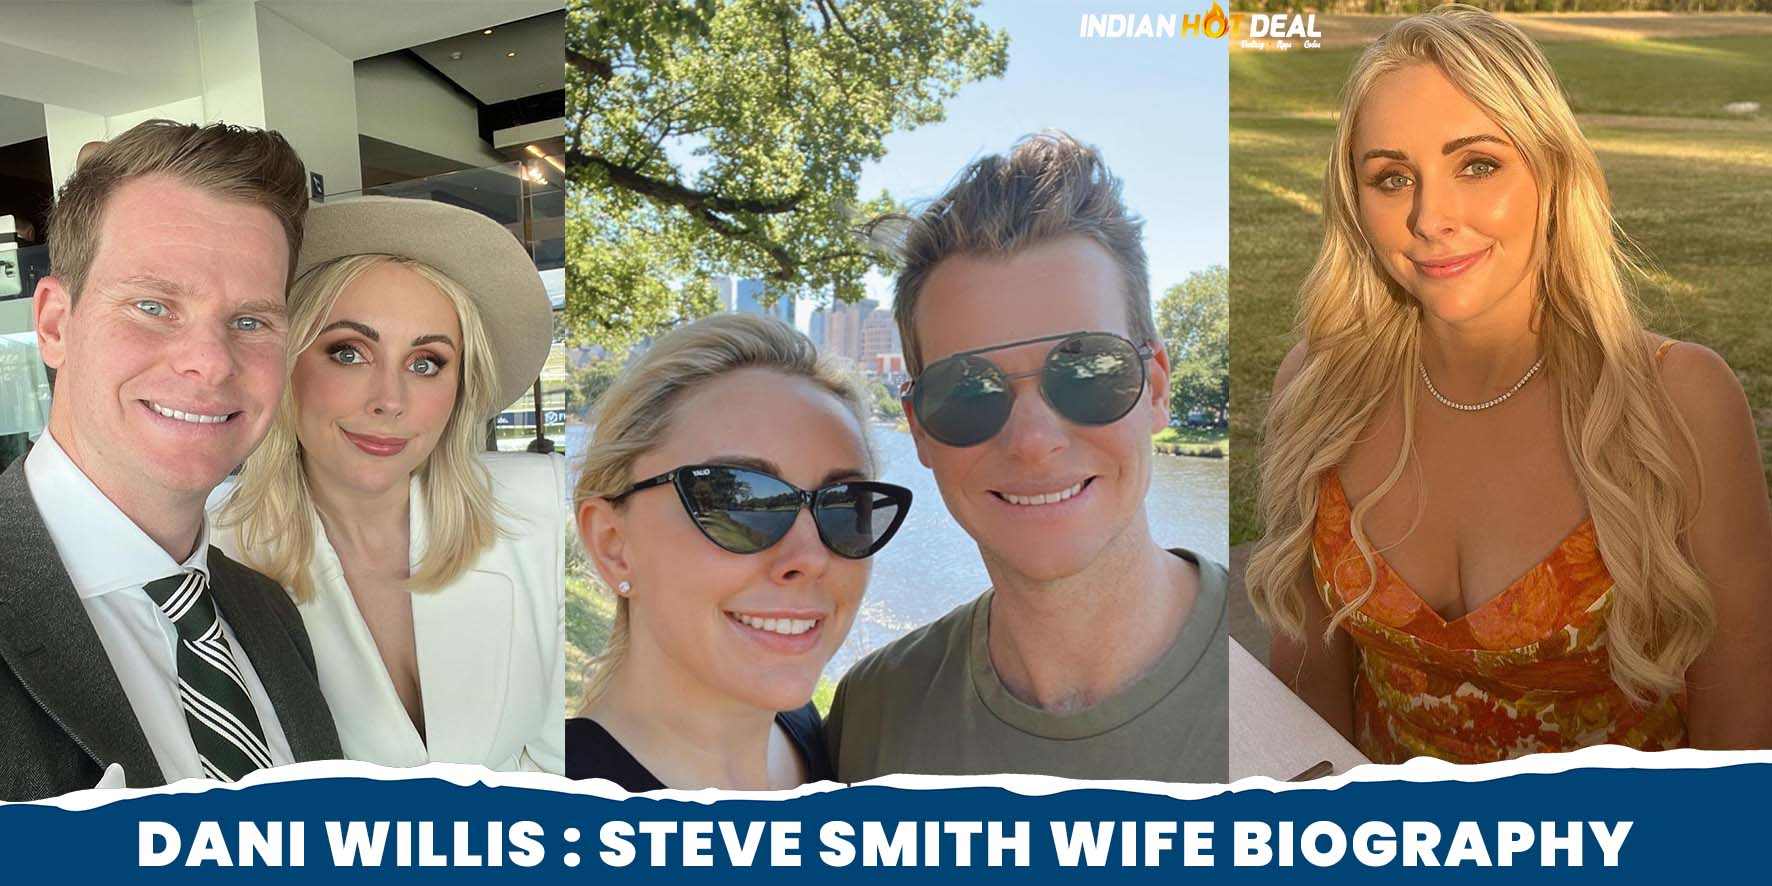 Dani Willis: Steve Smith Wife Biography